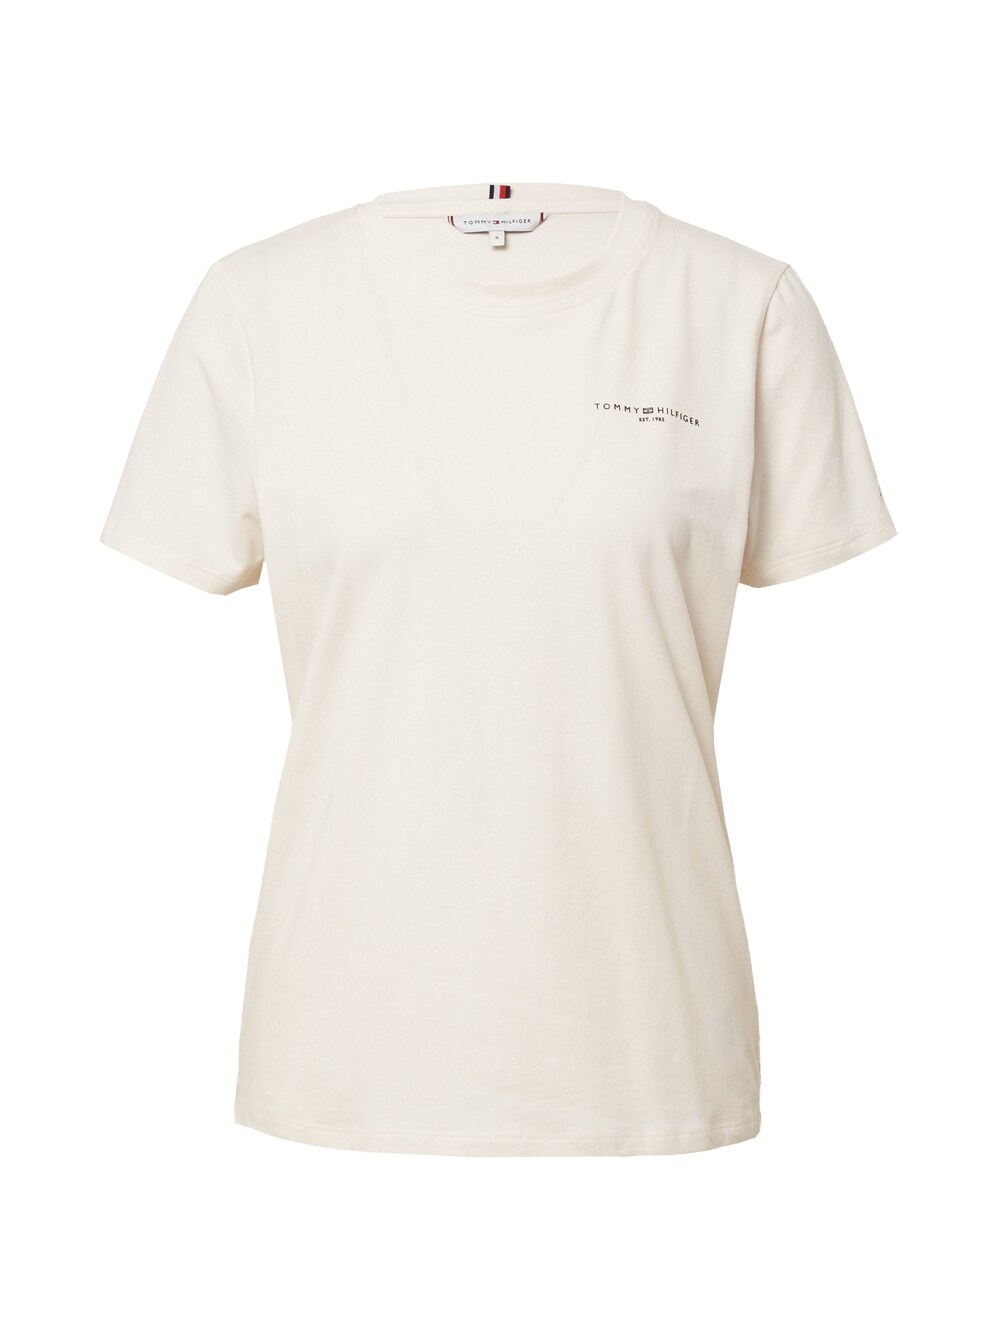 Рубашка Tommy Hilfiger, белый/натуральный белый